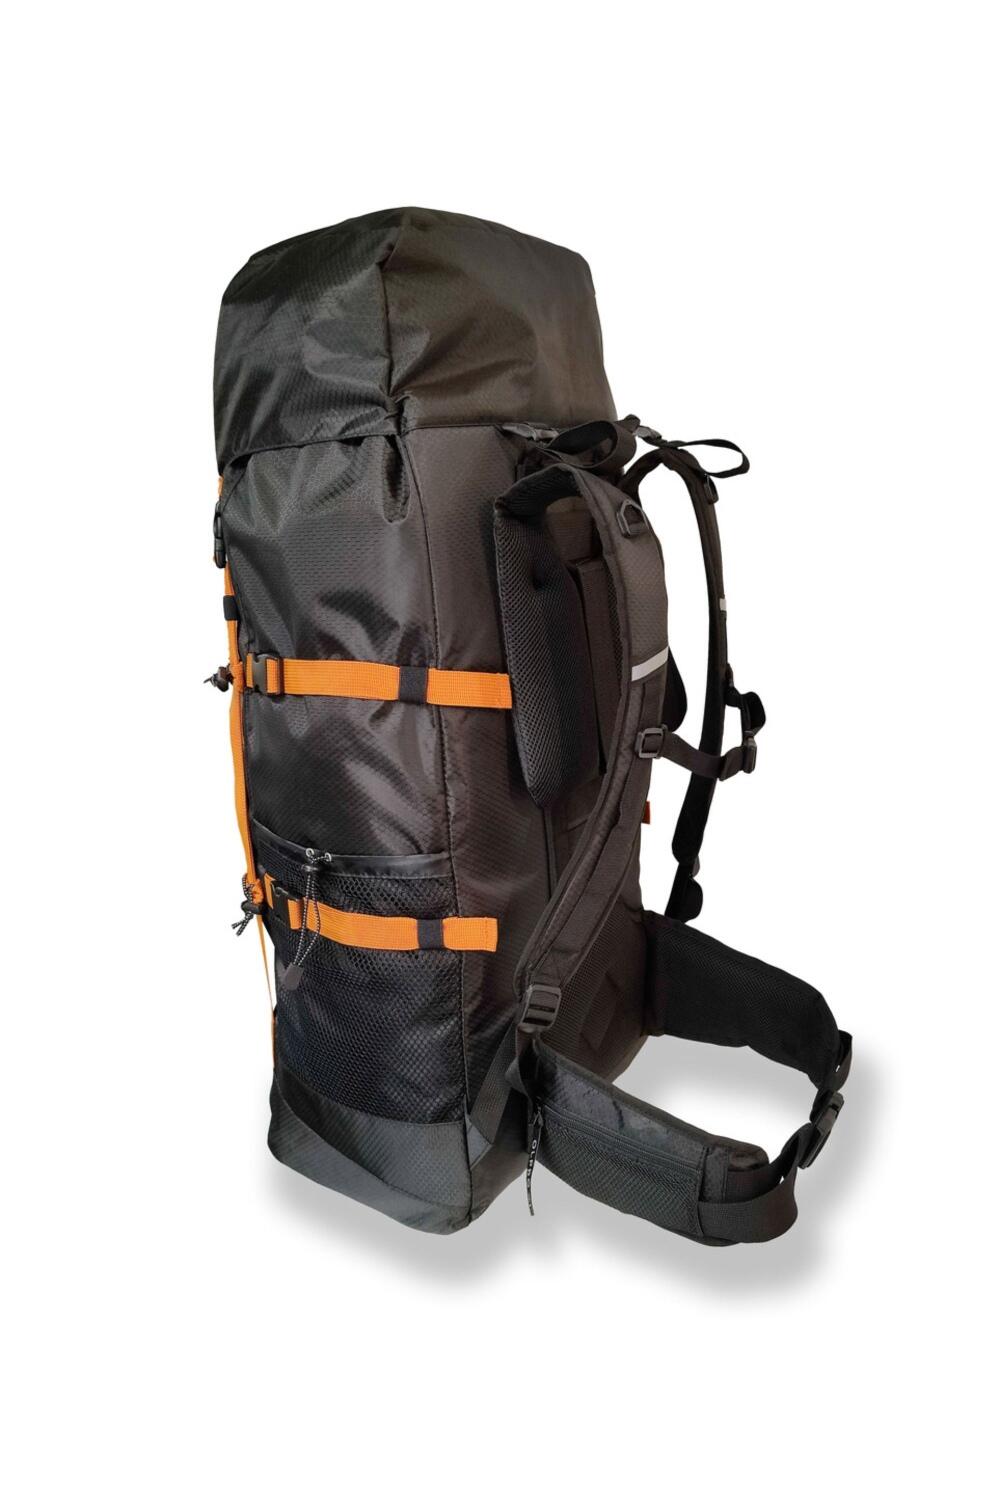 OLPRO 80L Rucksack Bag Black 3/4